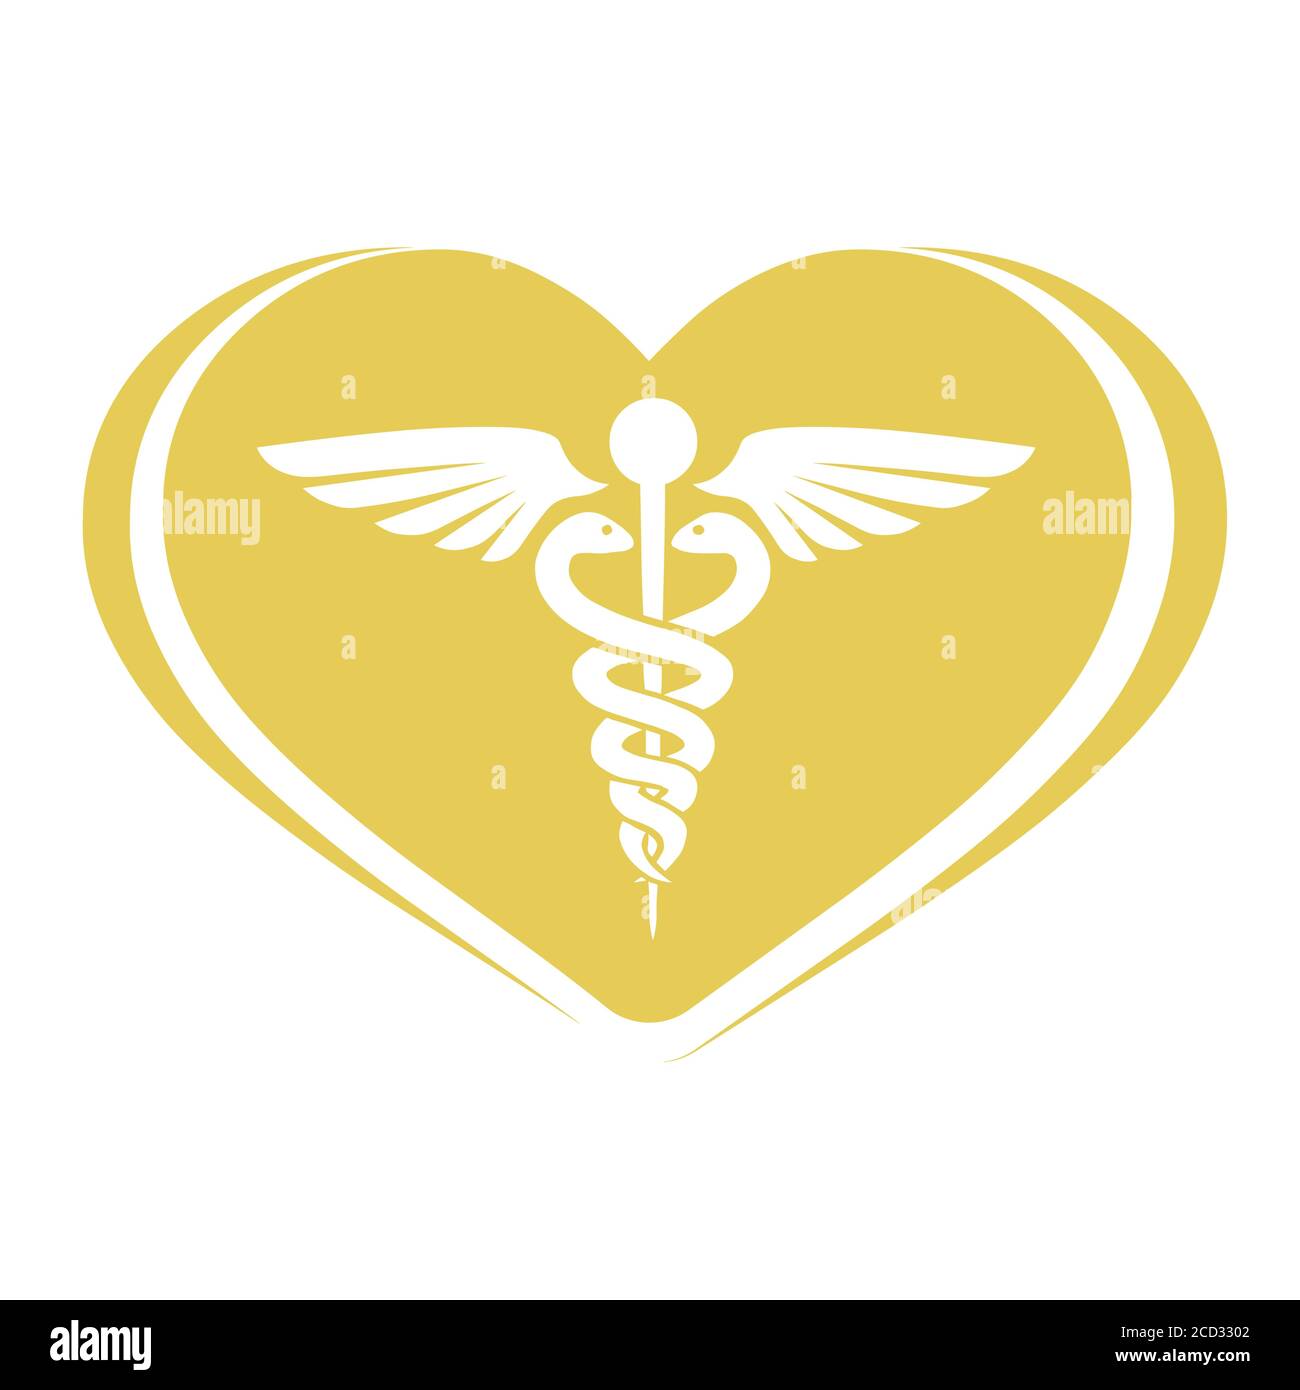 Caduceus illustration vector logo design health care and medical symbols. Stock Vector